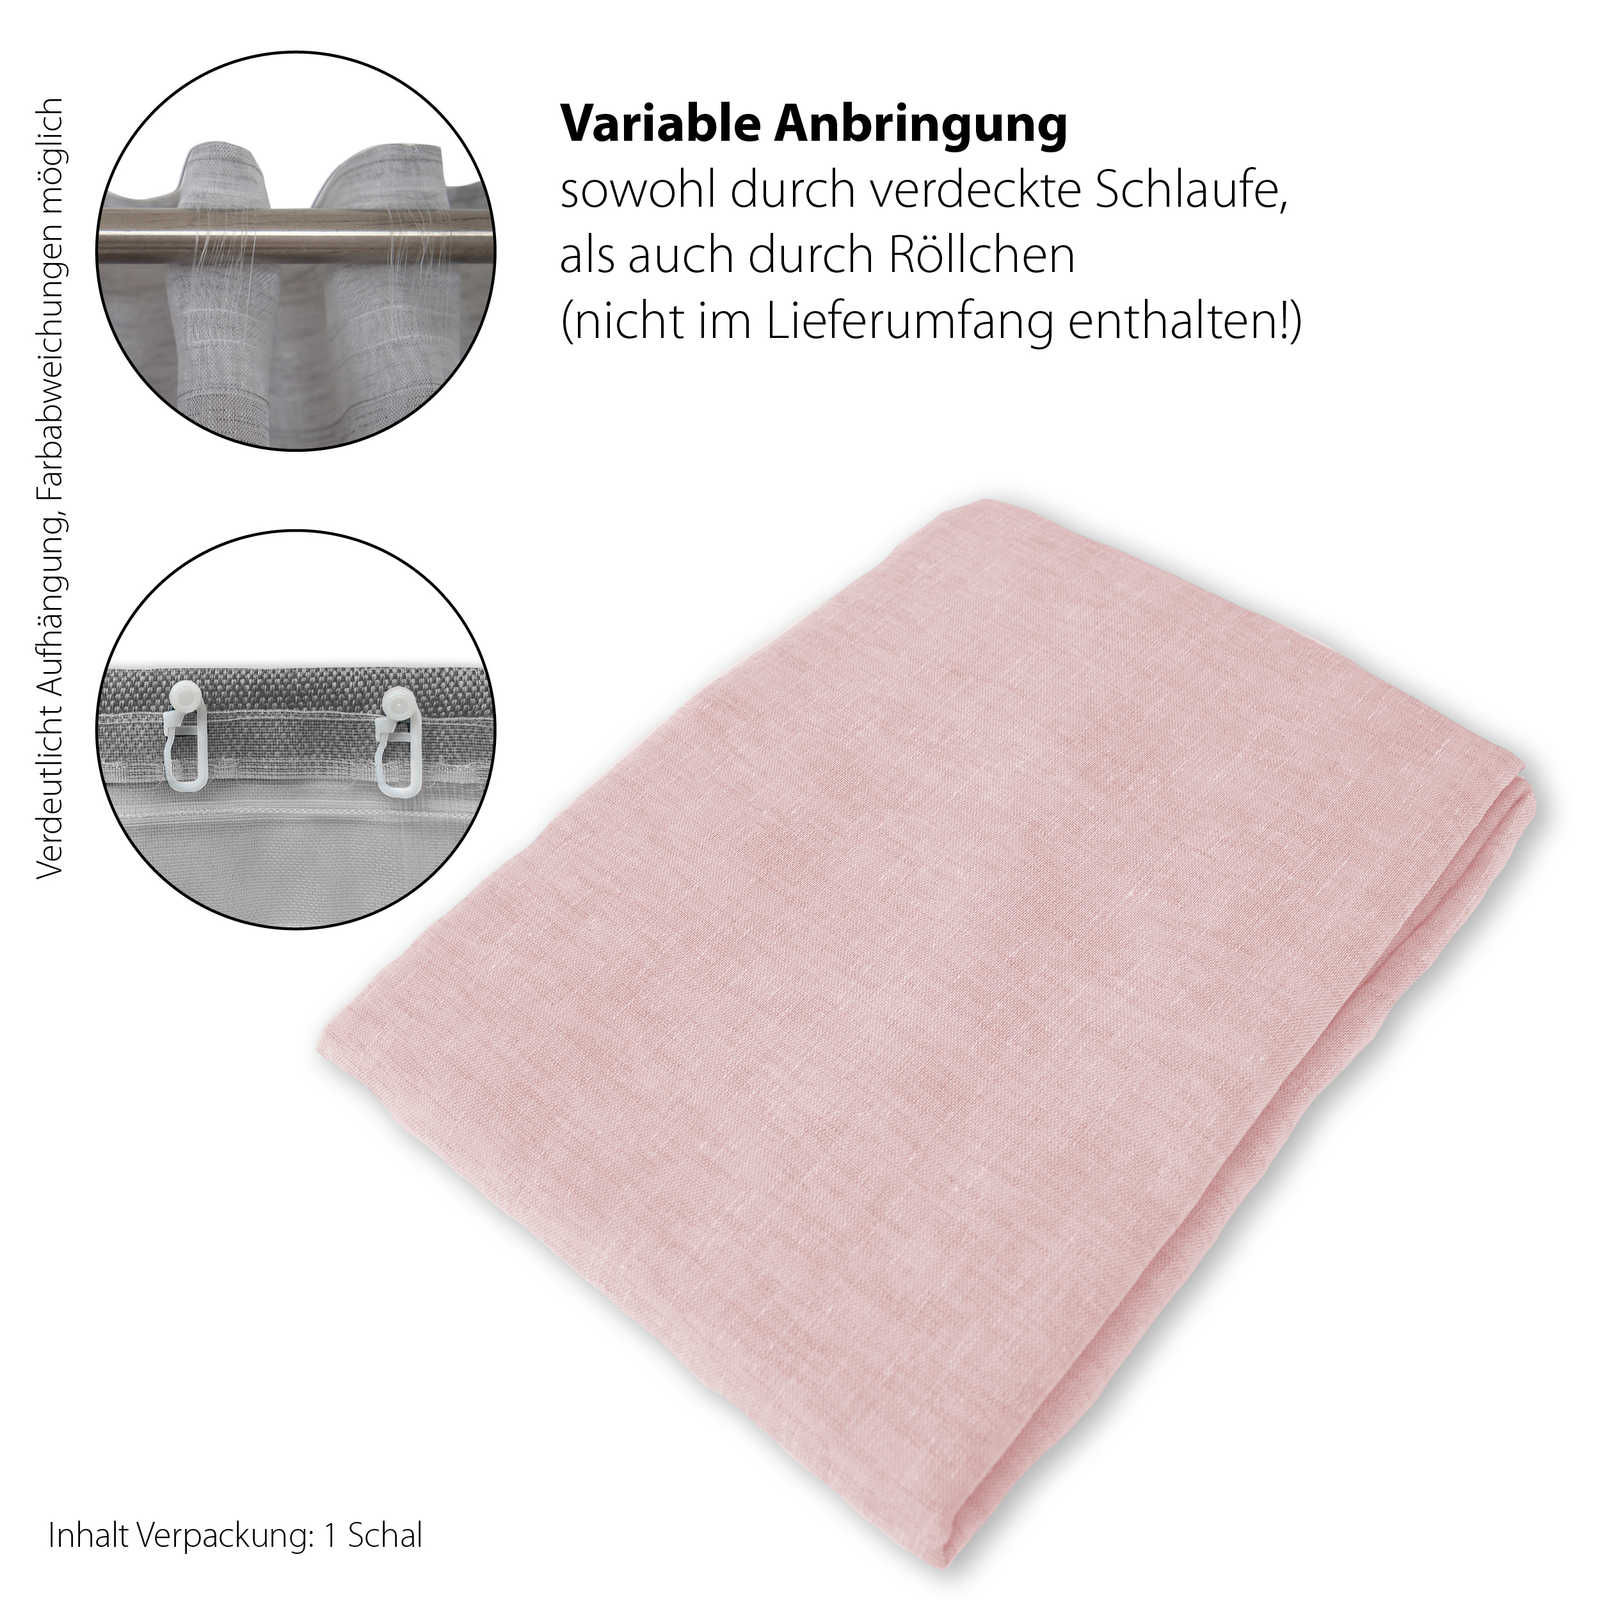             Foulard decorativo 140 cm x 245 cm in fibra artificiale rosa
        